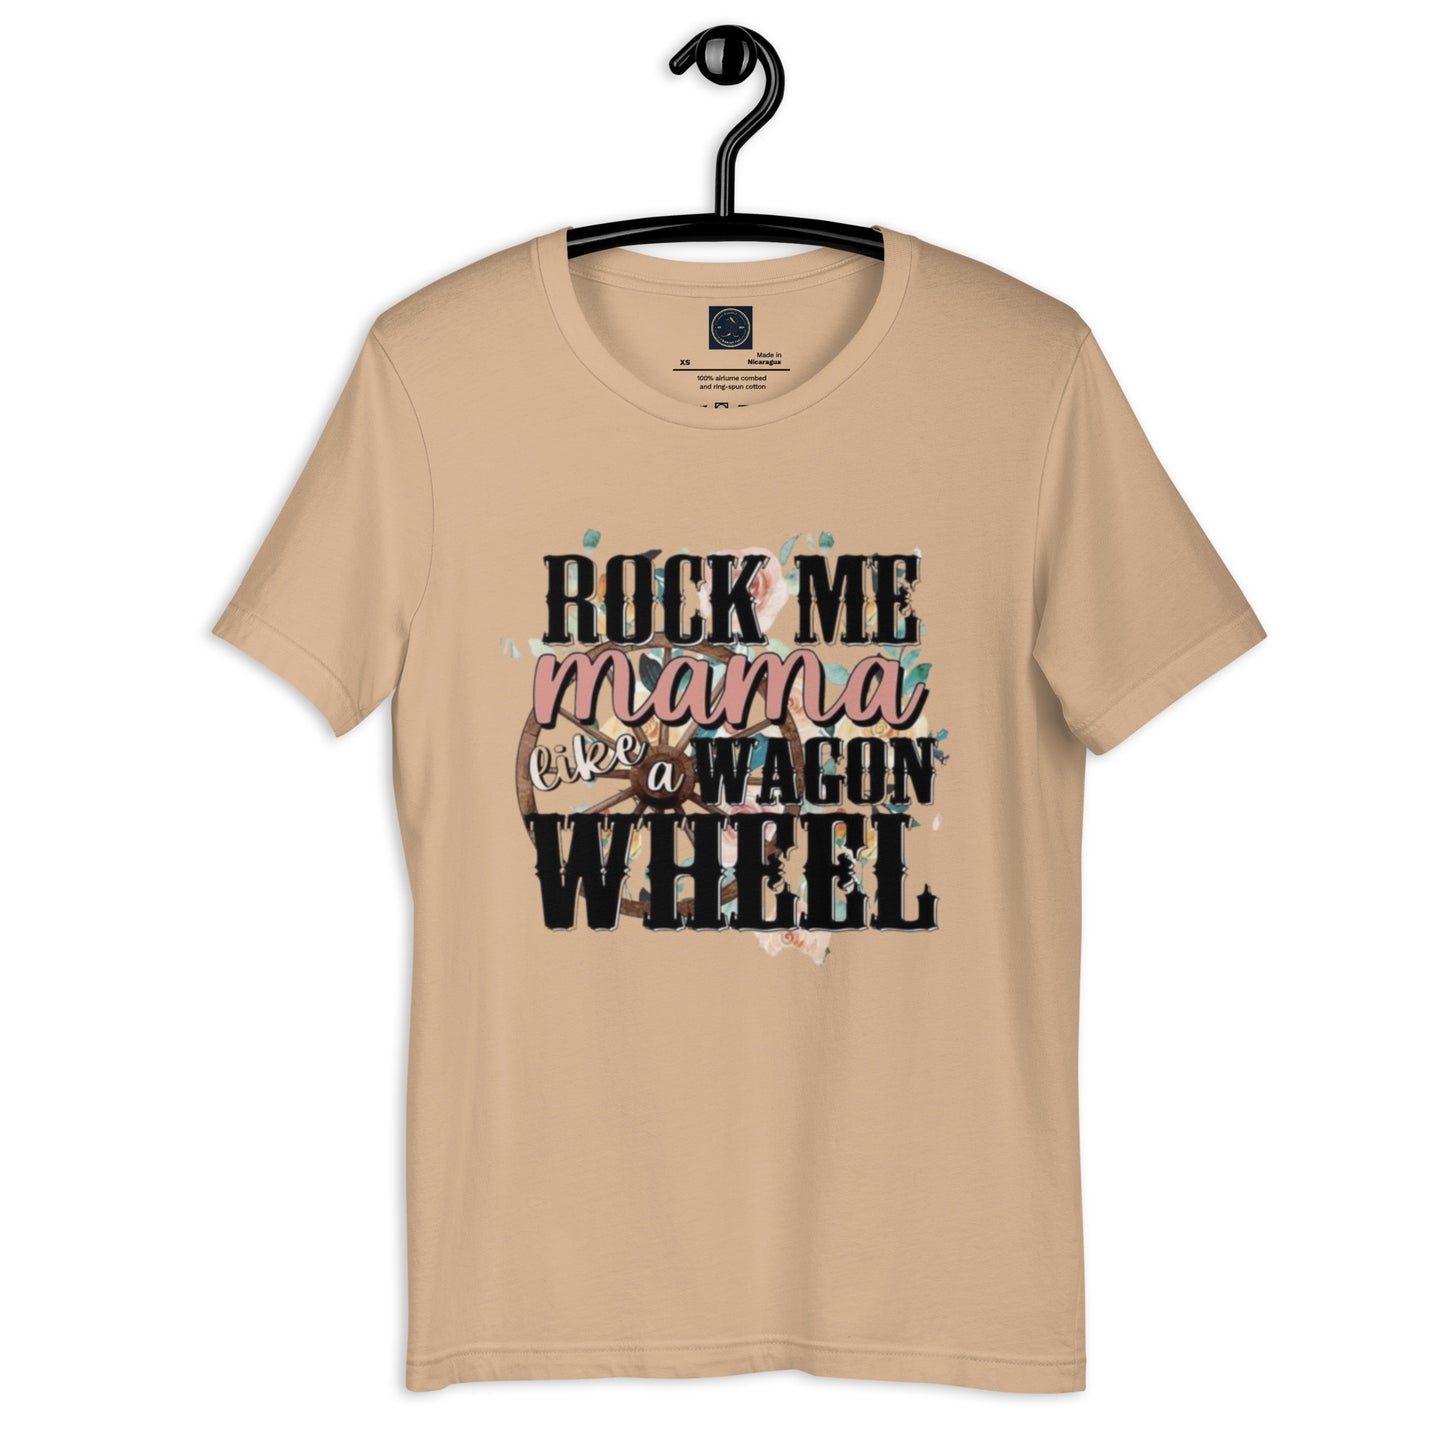 Wagon Wheel - Classic Country Tees